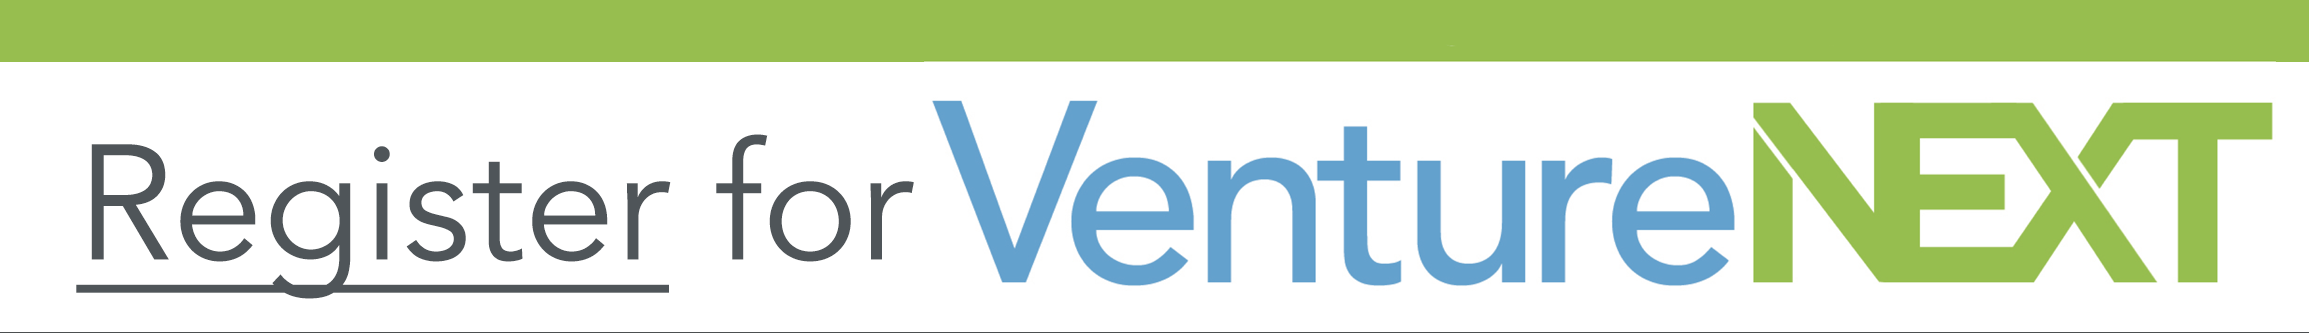 VentureNEXT Registration_short